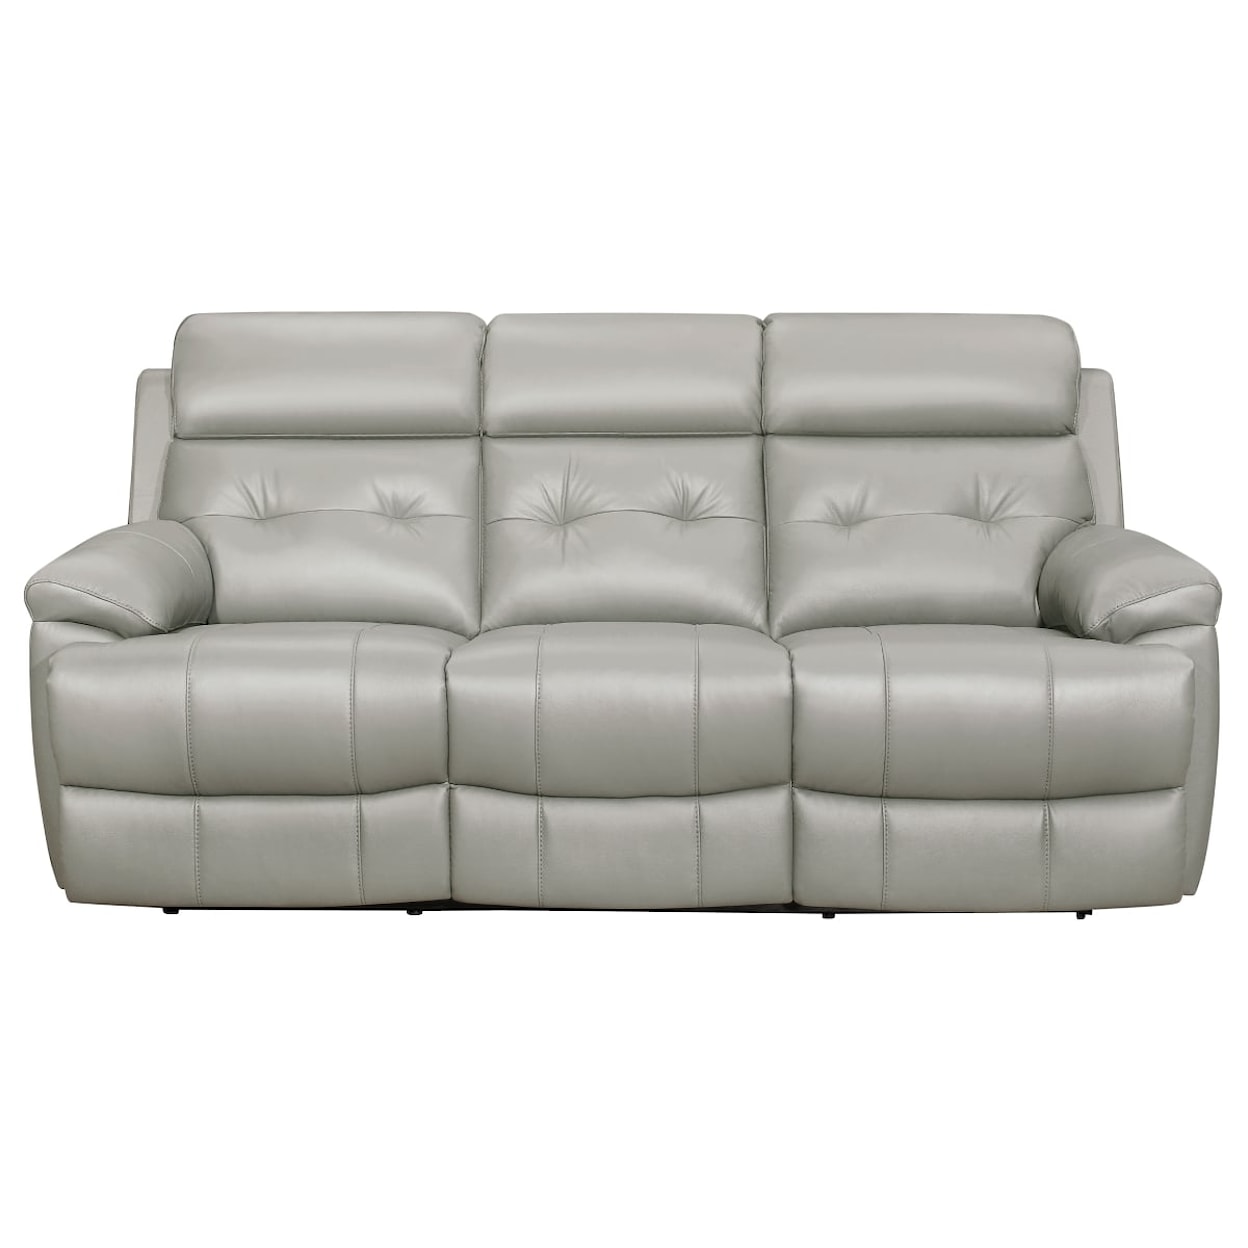 Homelegance Furniture Lambent Double Reclining Sofa